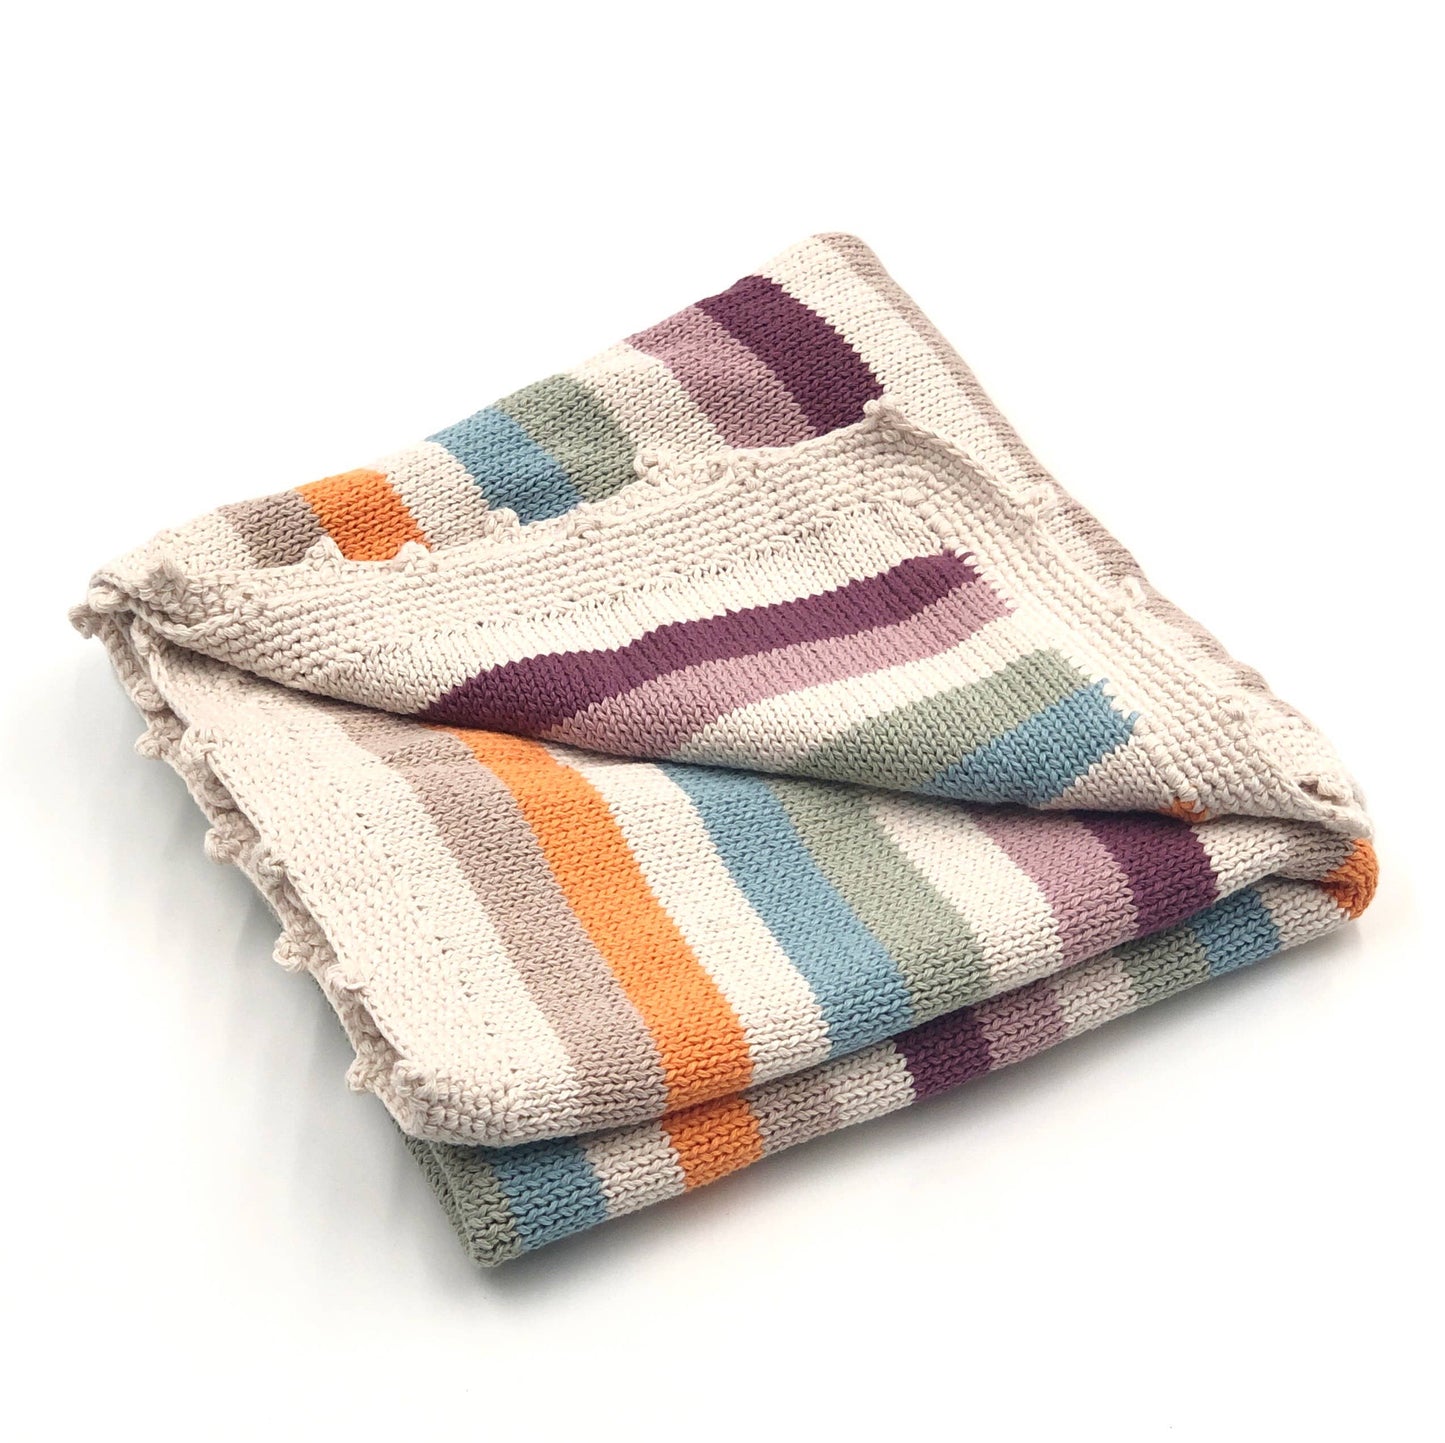 Stripey Baby Blanket - Multi Earthy tones